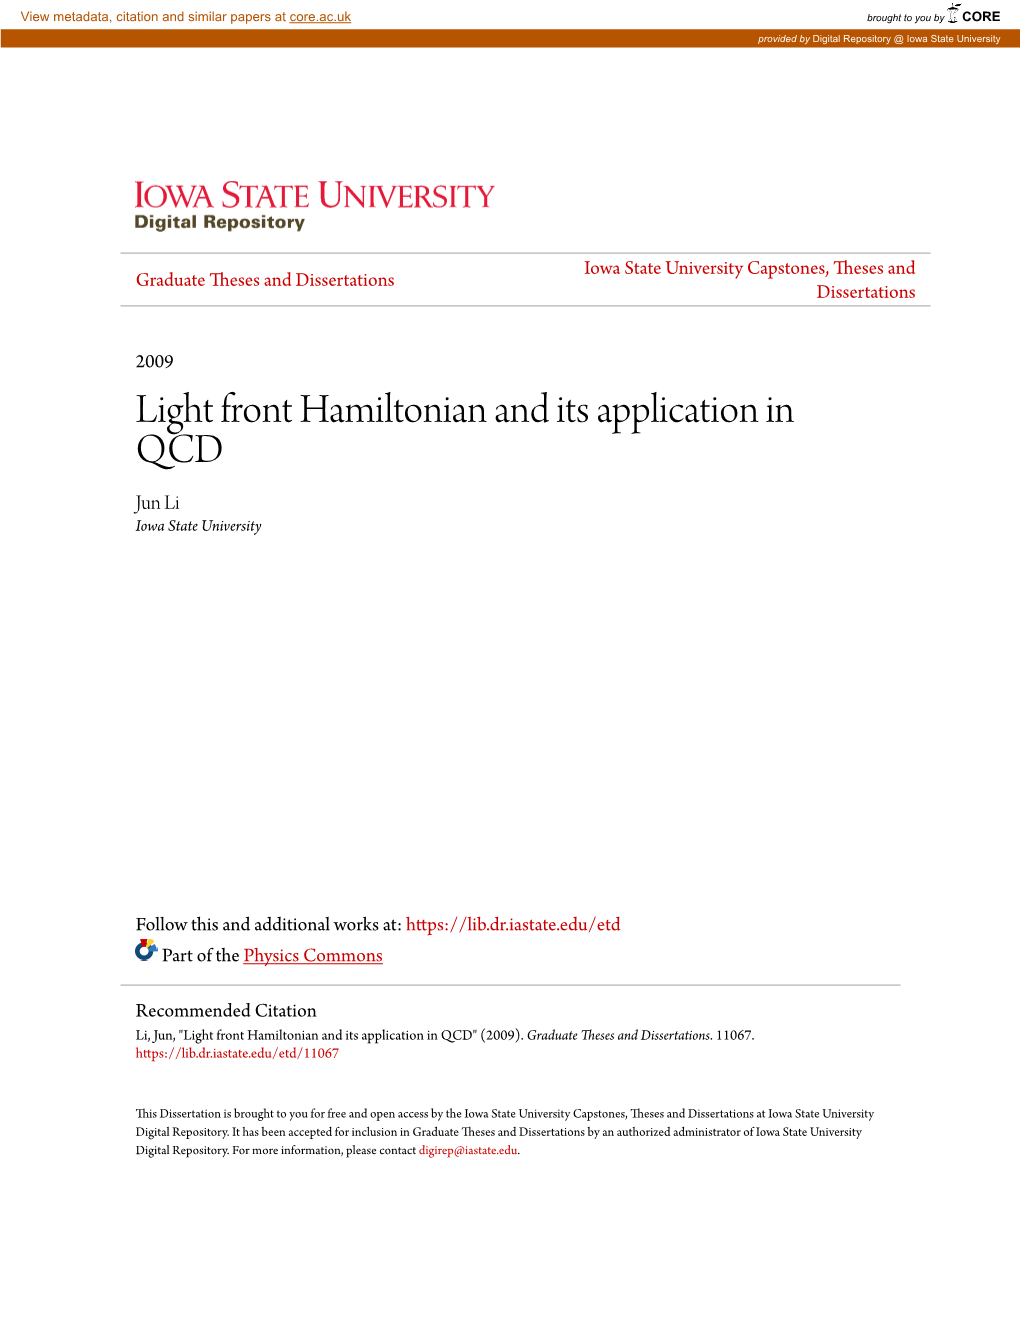 Light Front Hamiltonian and Its Application in QCD Jun Li Iowa State University